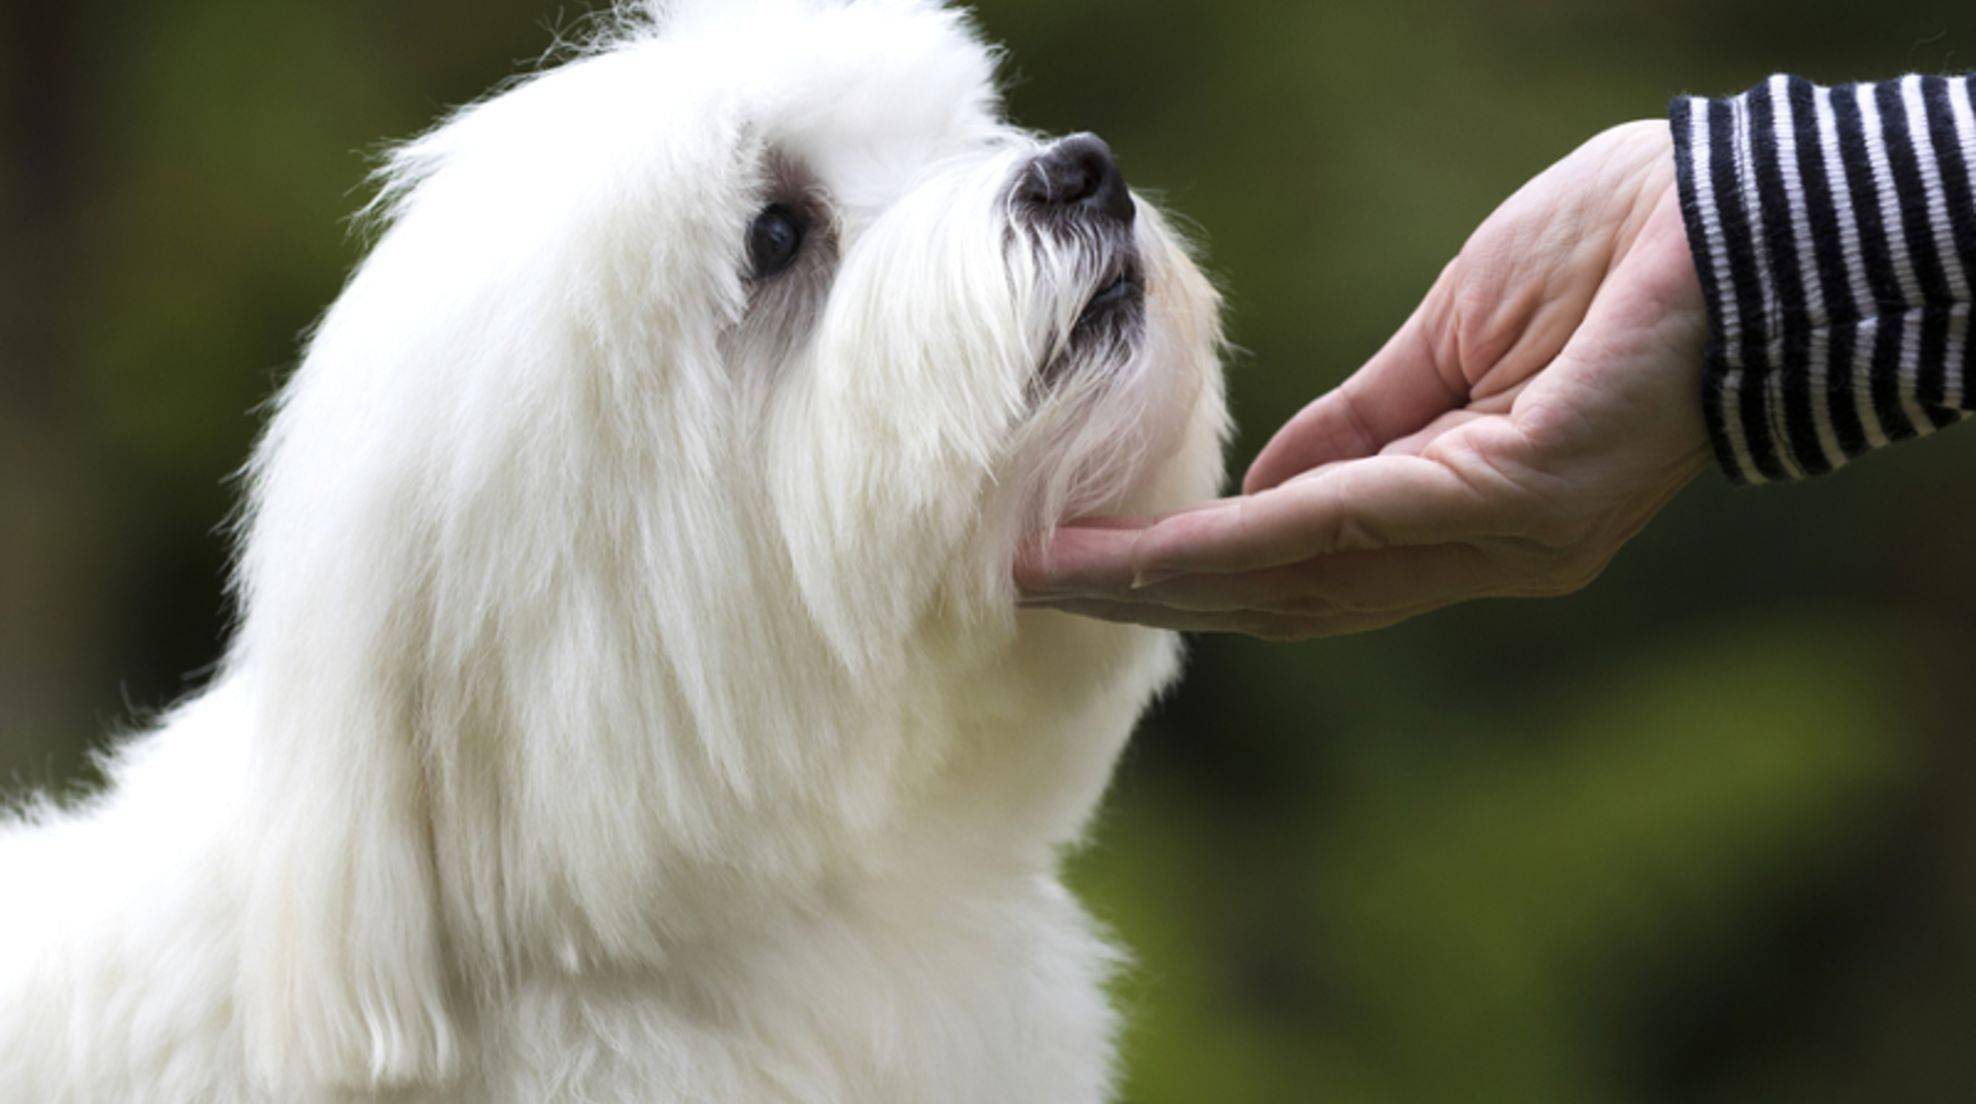 Petting strangers' dogs: a good idea?